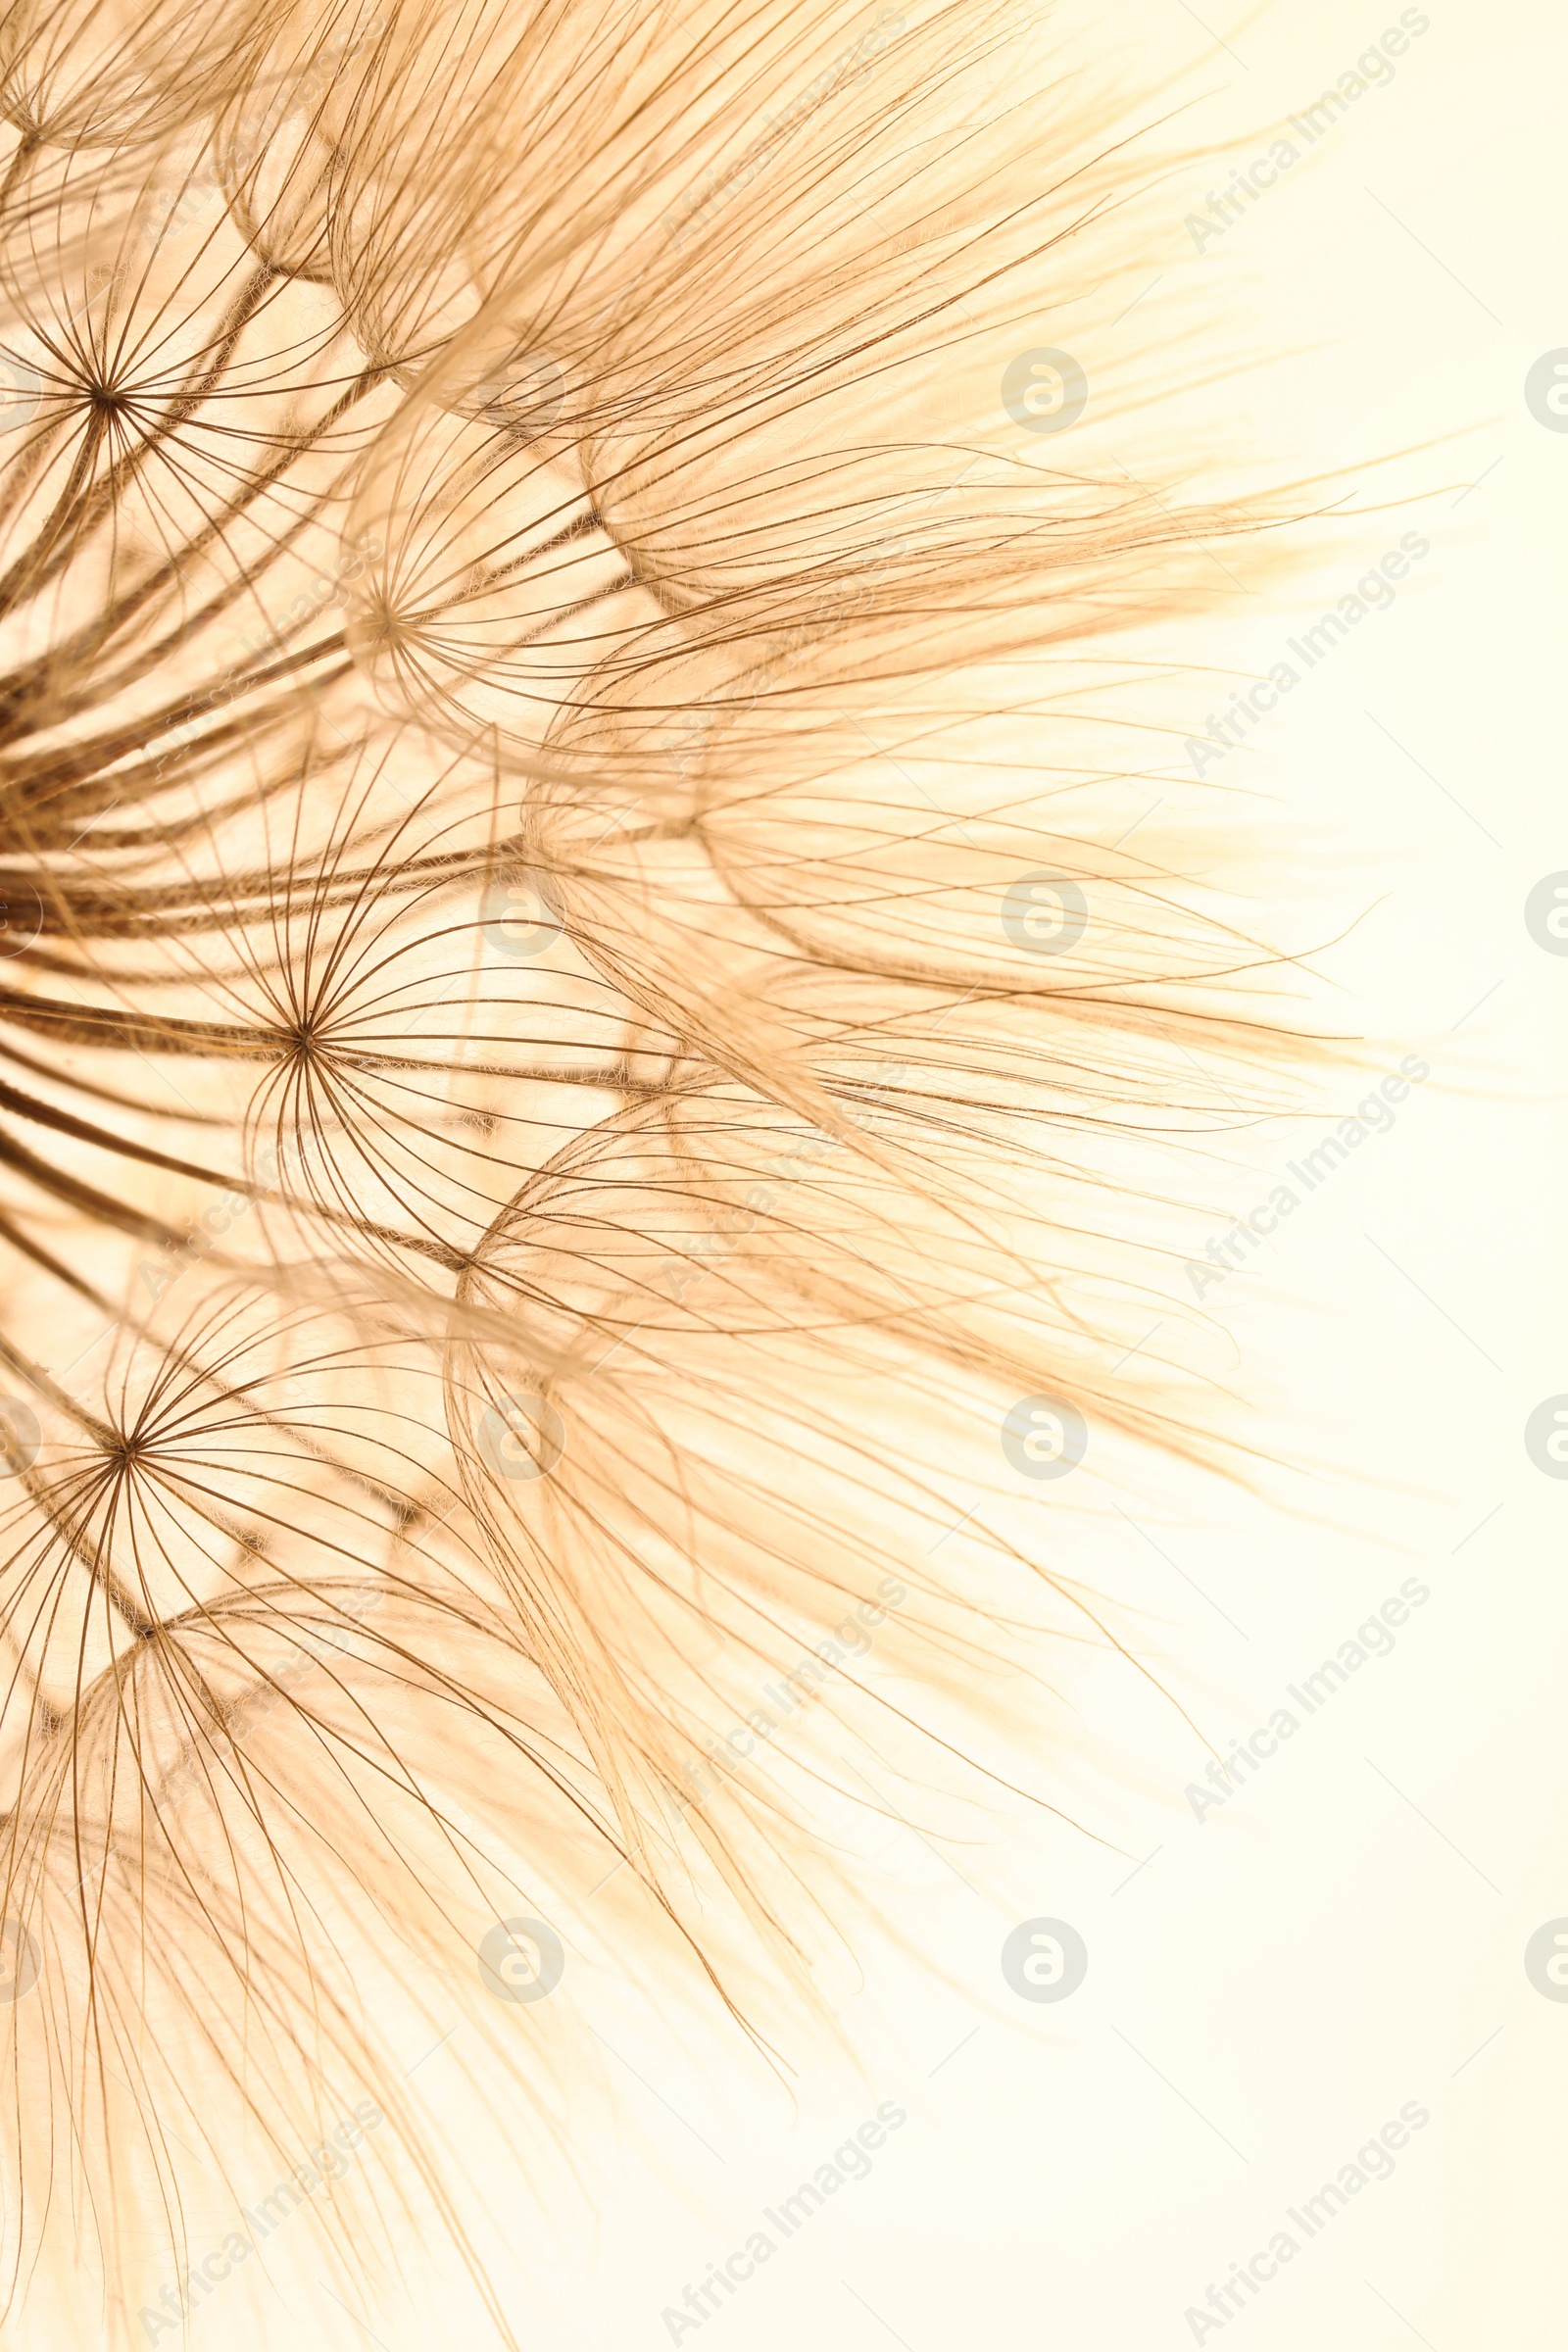 Photo of Beautiful fluffy dandelion flower on beige background, closeup